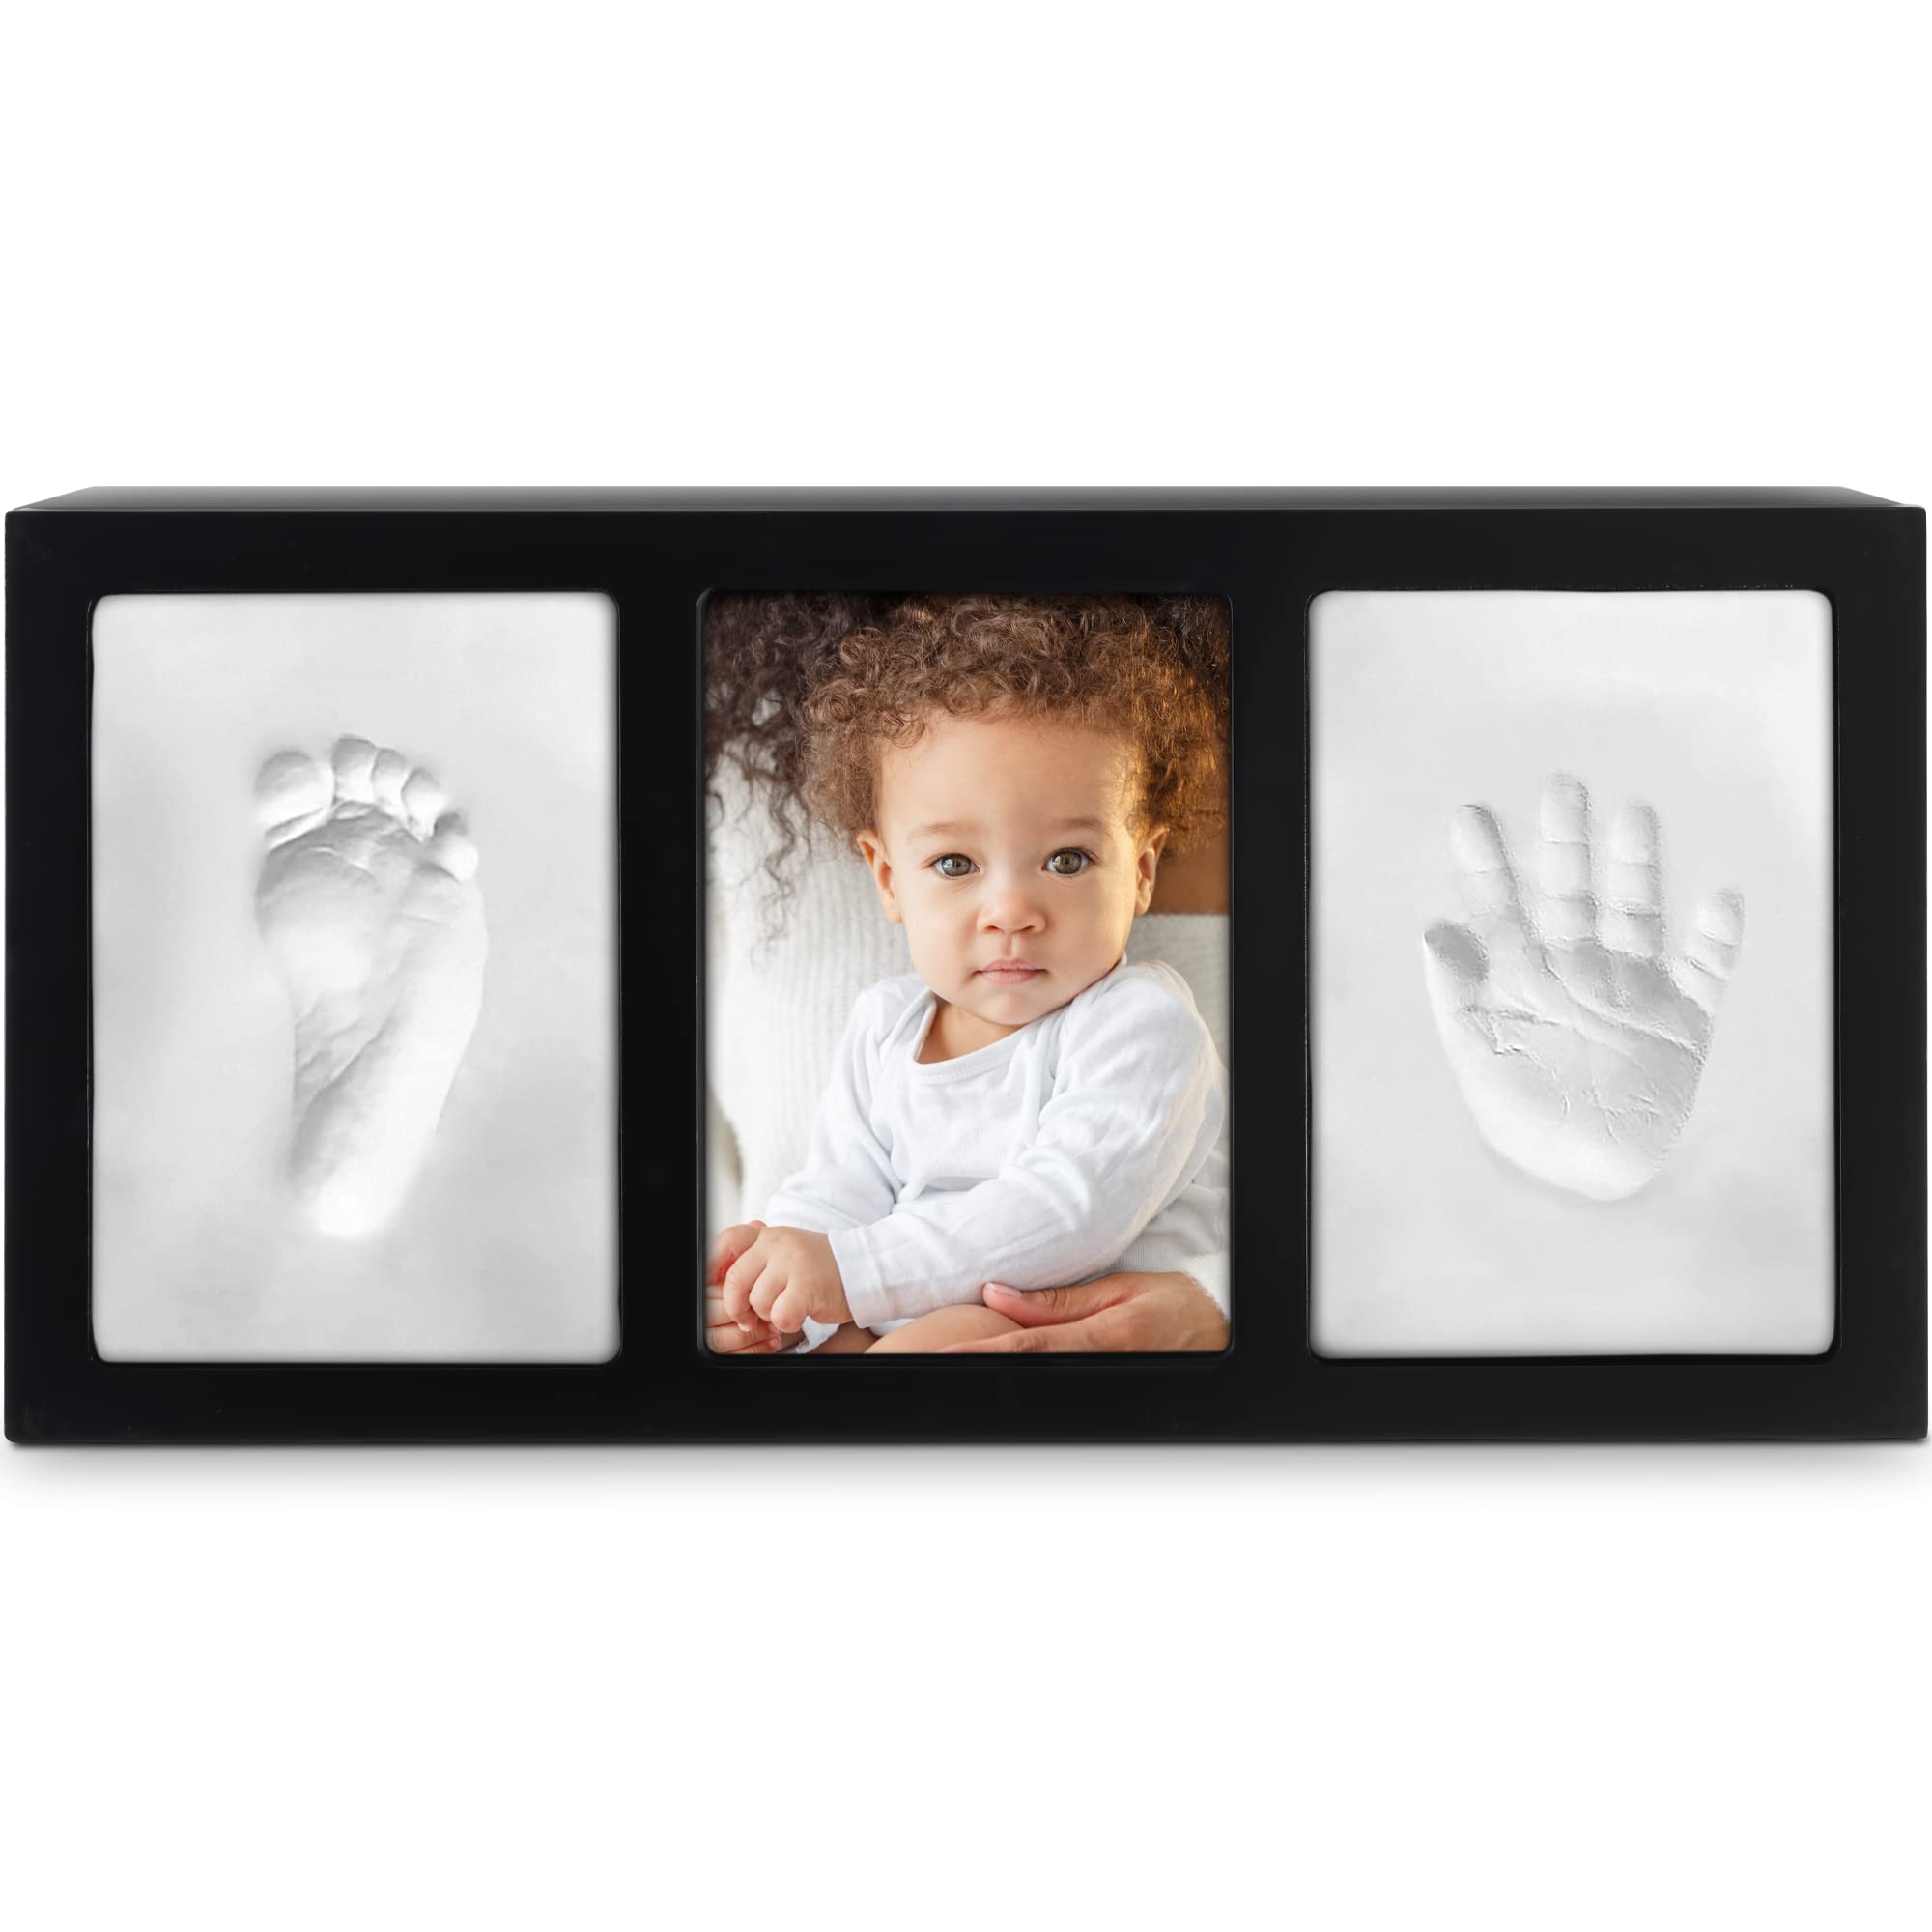  Baby Prints Handprint and Footprint Kit, Newborn Hand